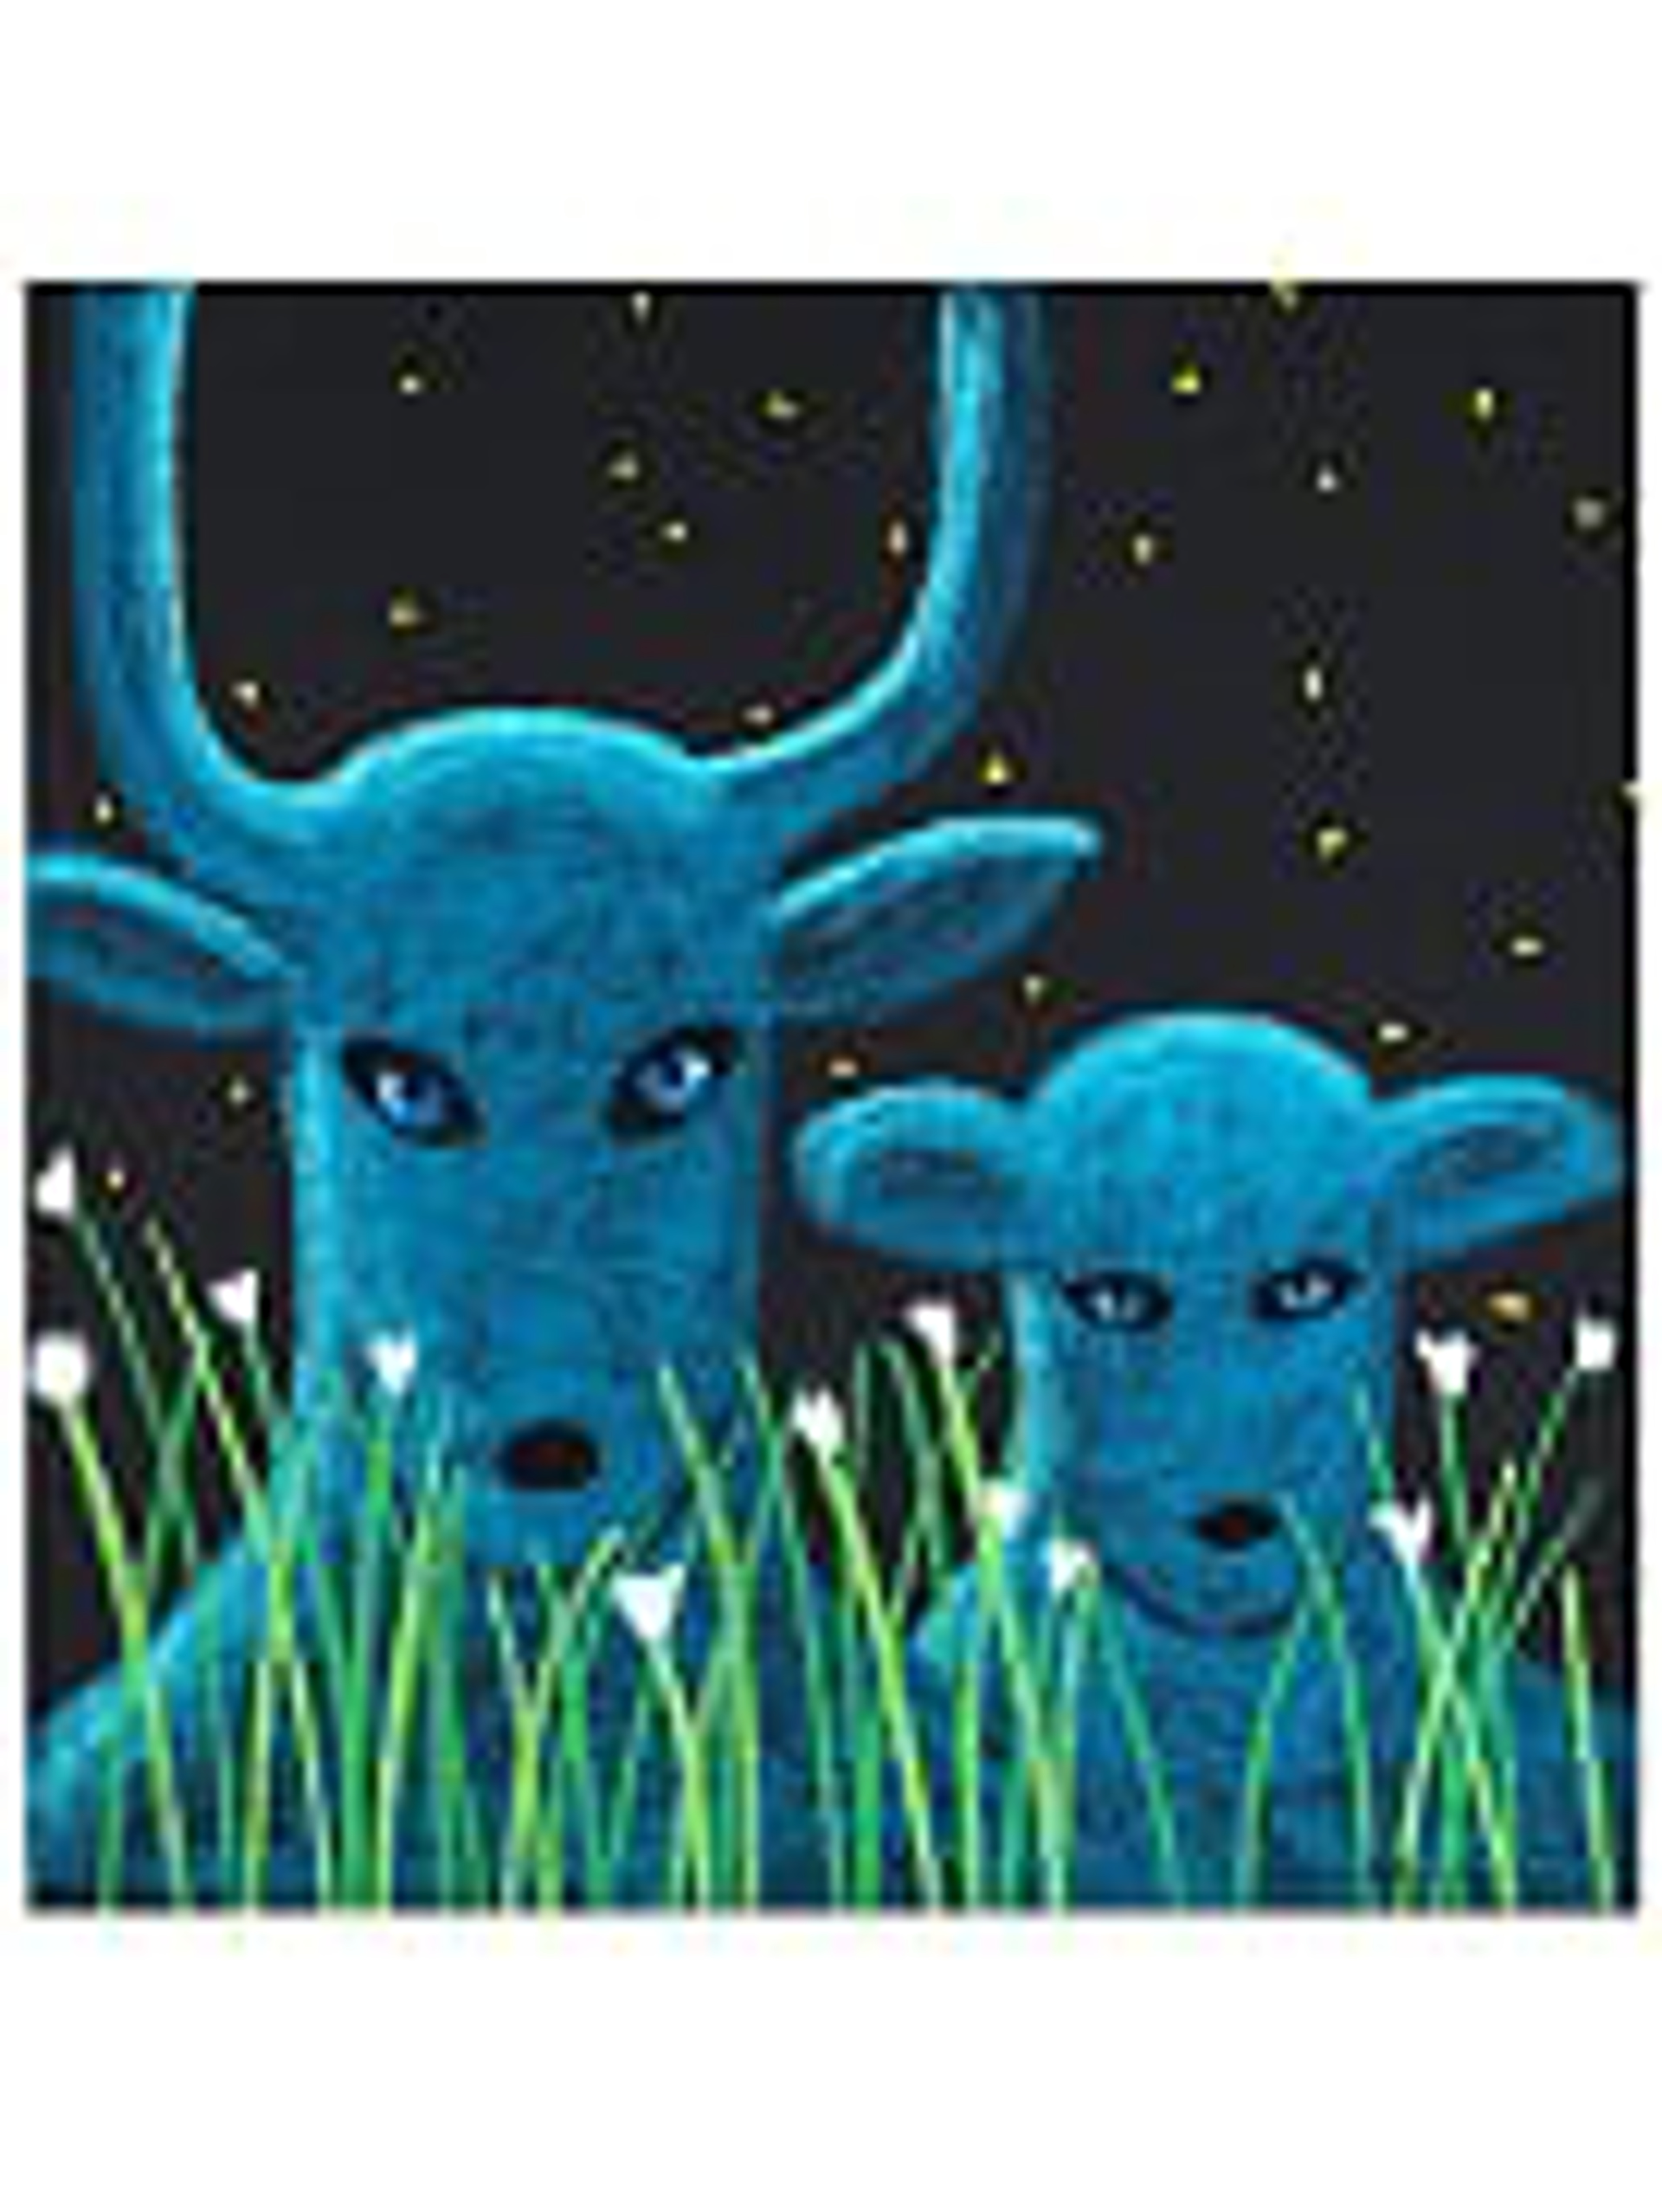 From: The Night Garden 'So Deer' by Carole LaRoche